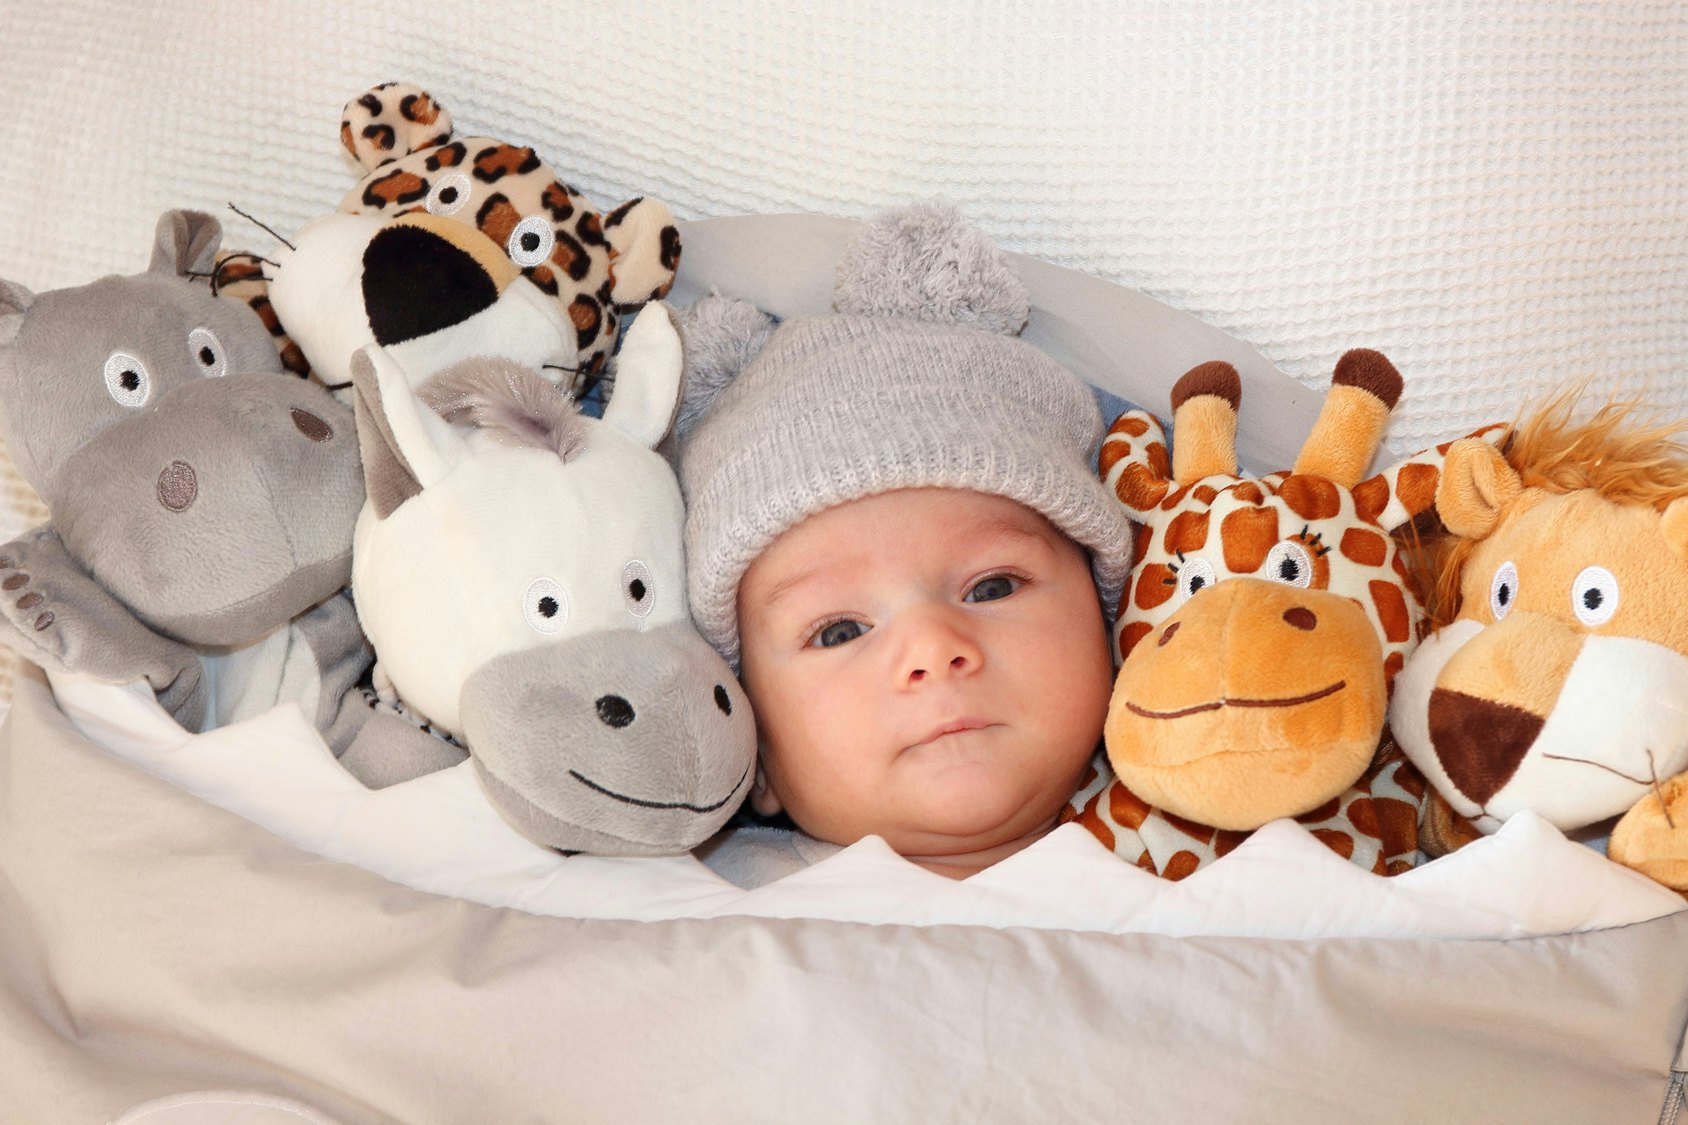 babies and stuffed animals